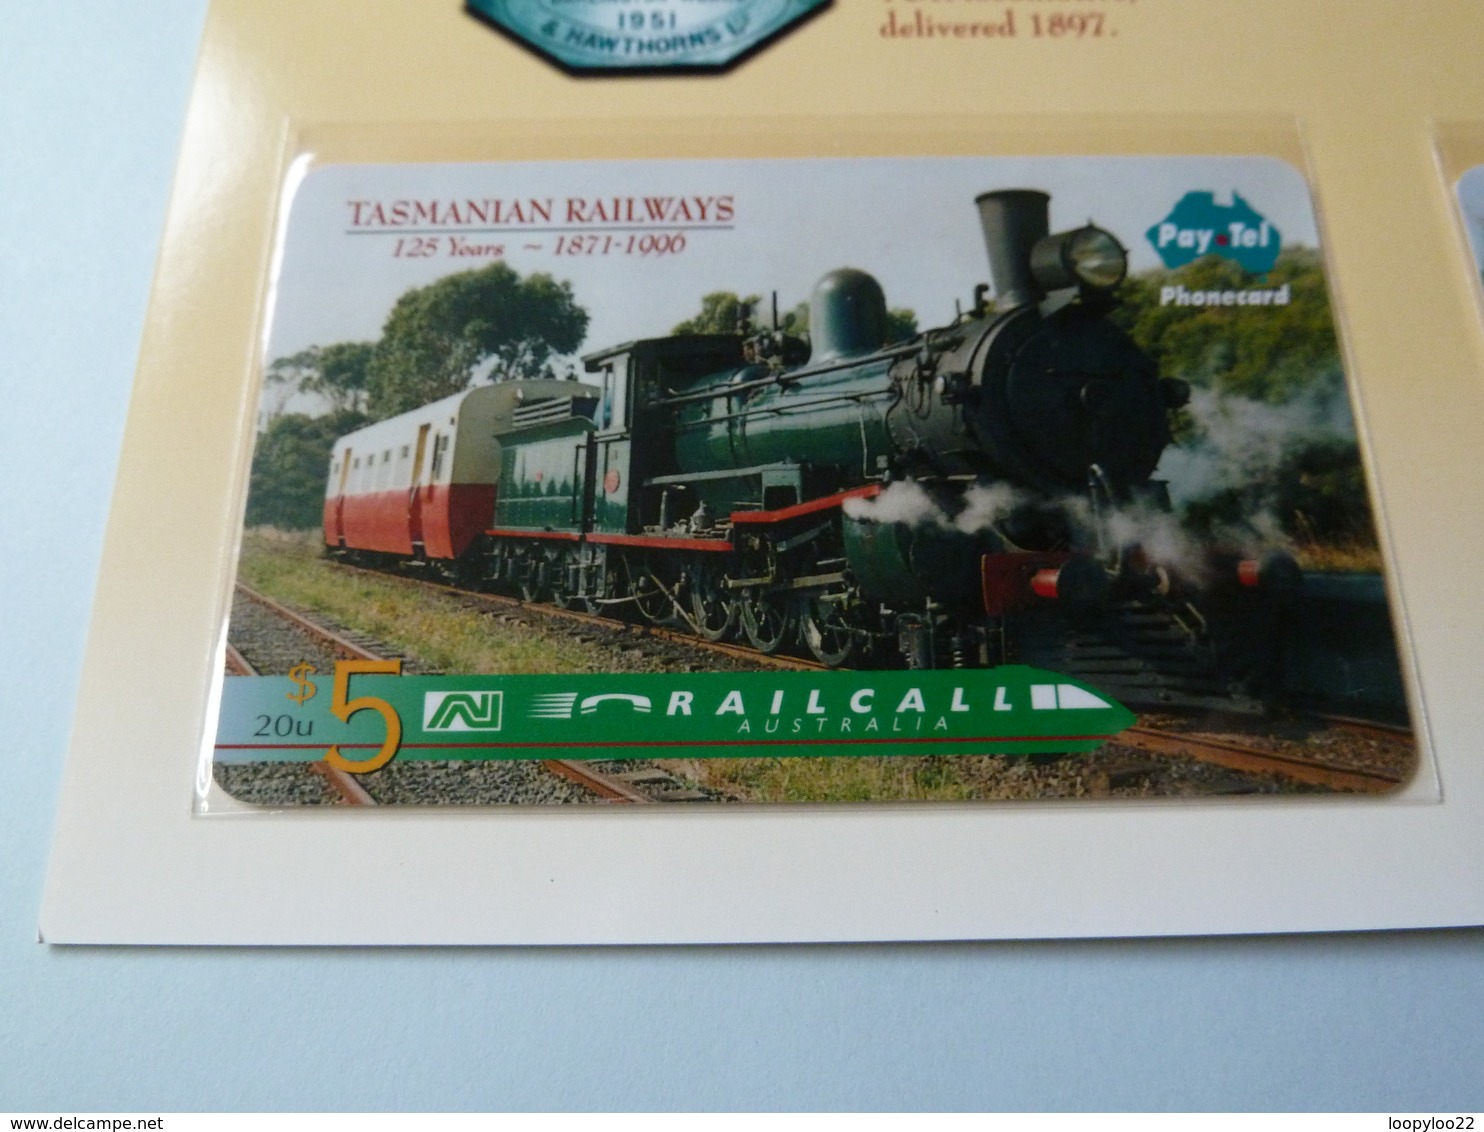 AUSTRALIA - PayTel - Tasmanian Railways 125 Years - Tasrail - Set Of 2 - 1500ex - Mint In Folder - Australie